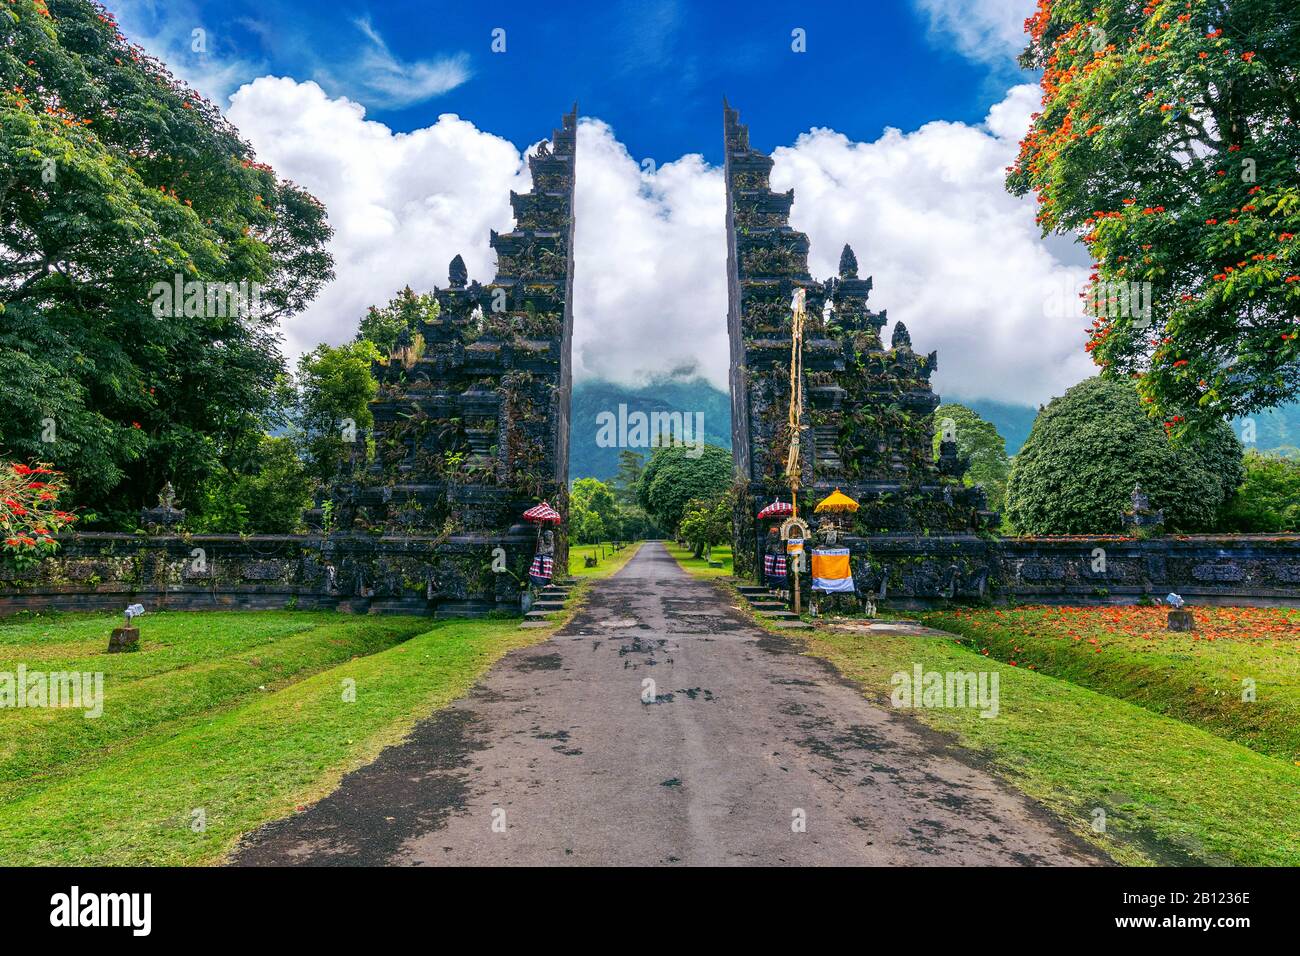 Big entrance gate in Bali, Indonesia. Stock Photo